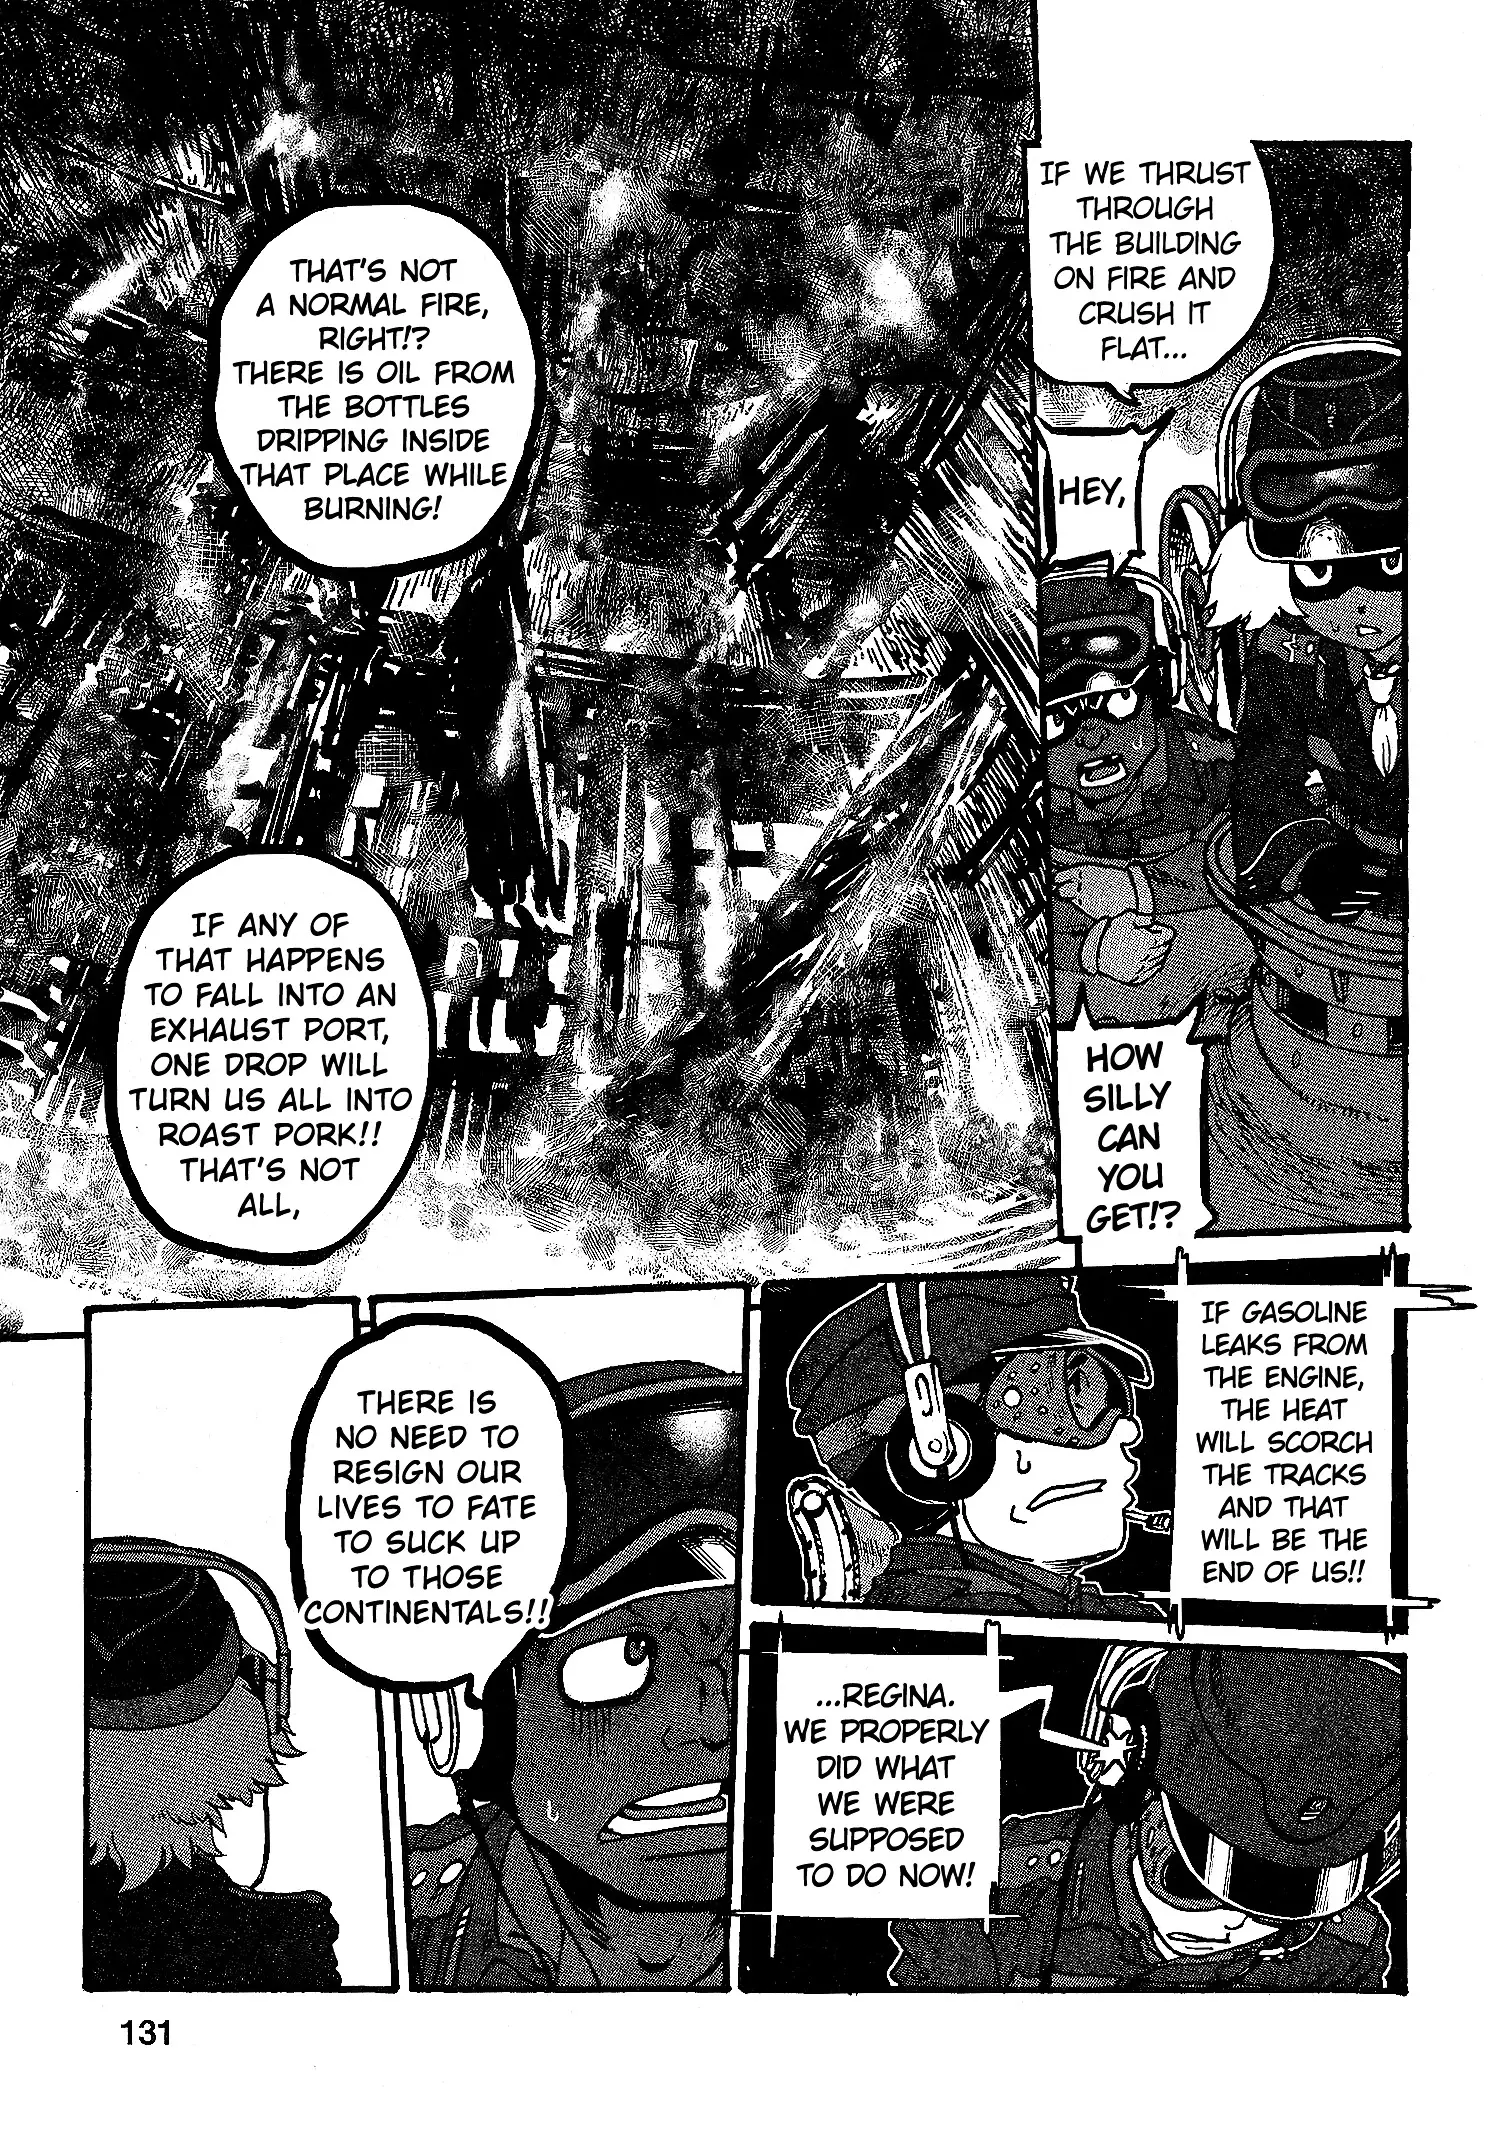 Groundless - Sekigan No Sogekihei - 17 page 19-39ffa9b2